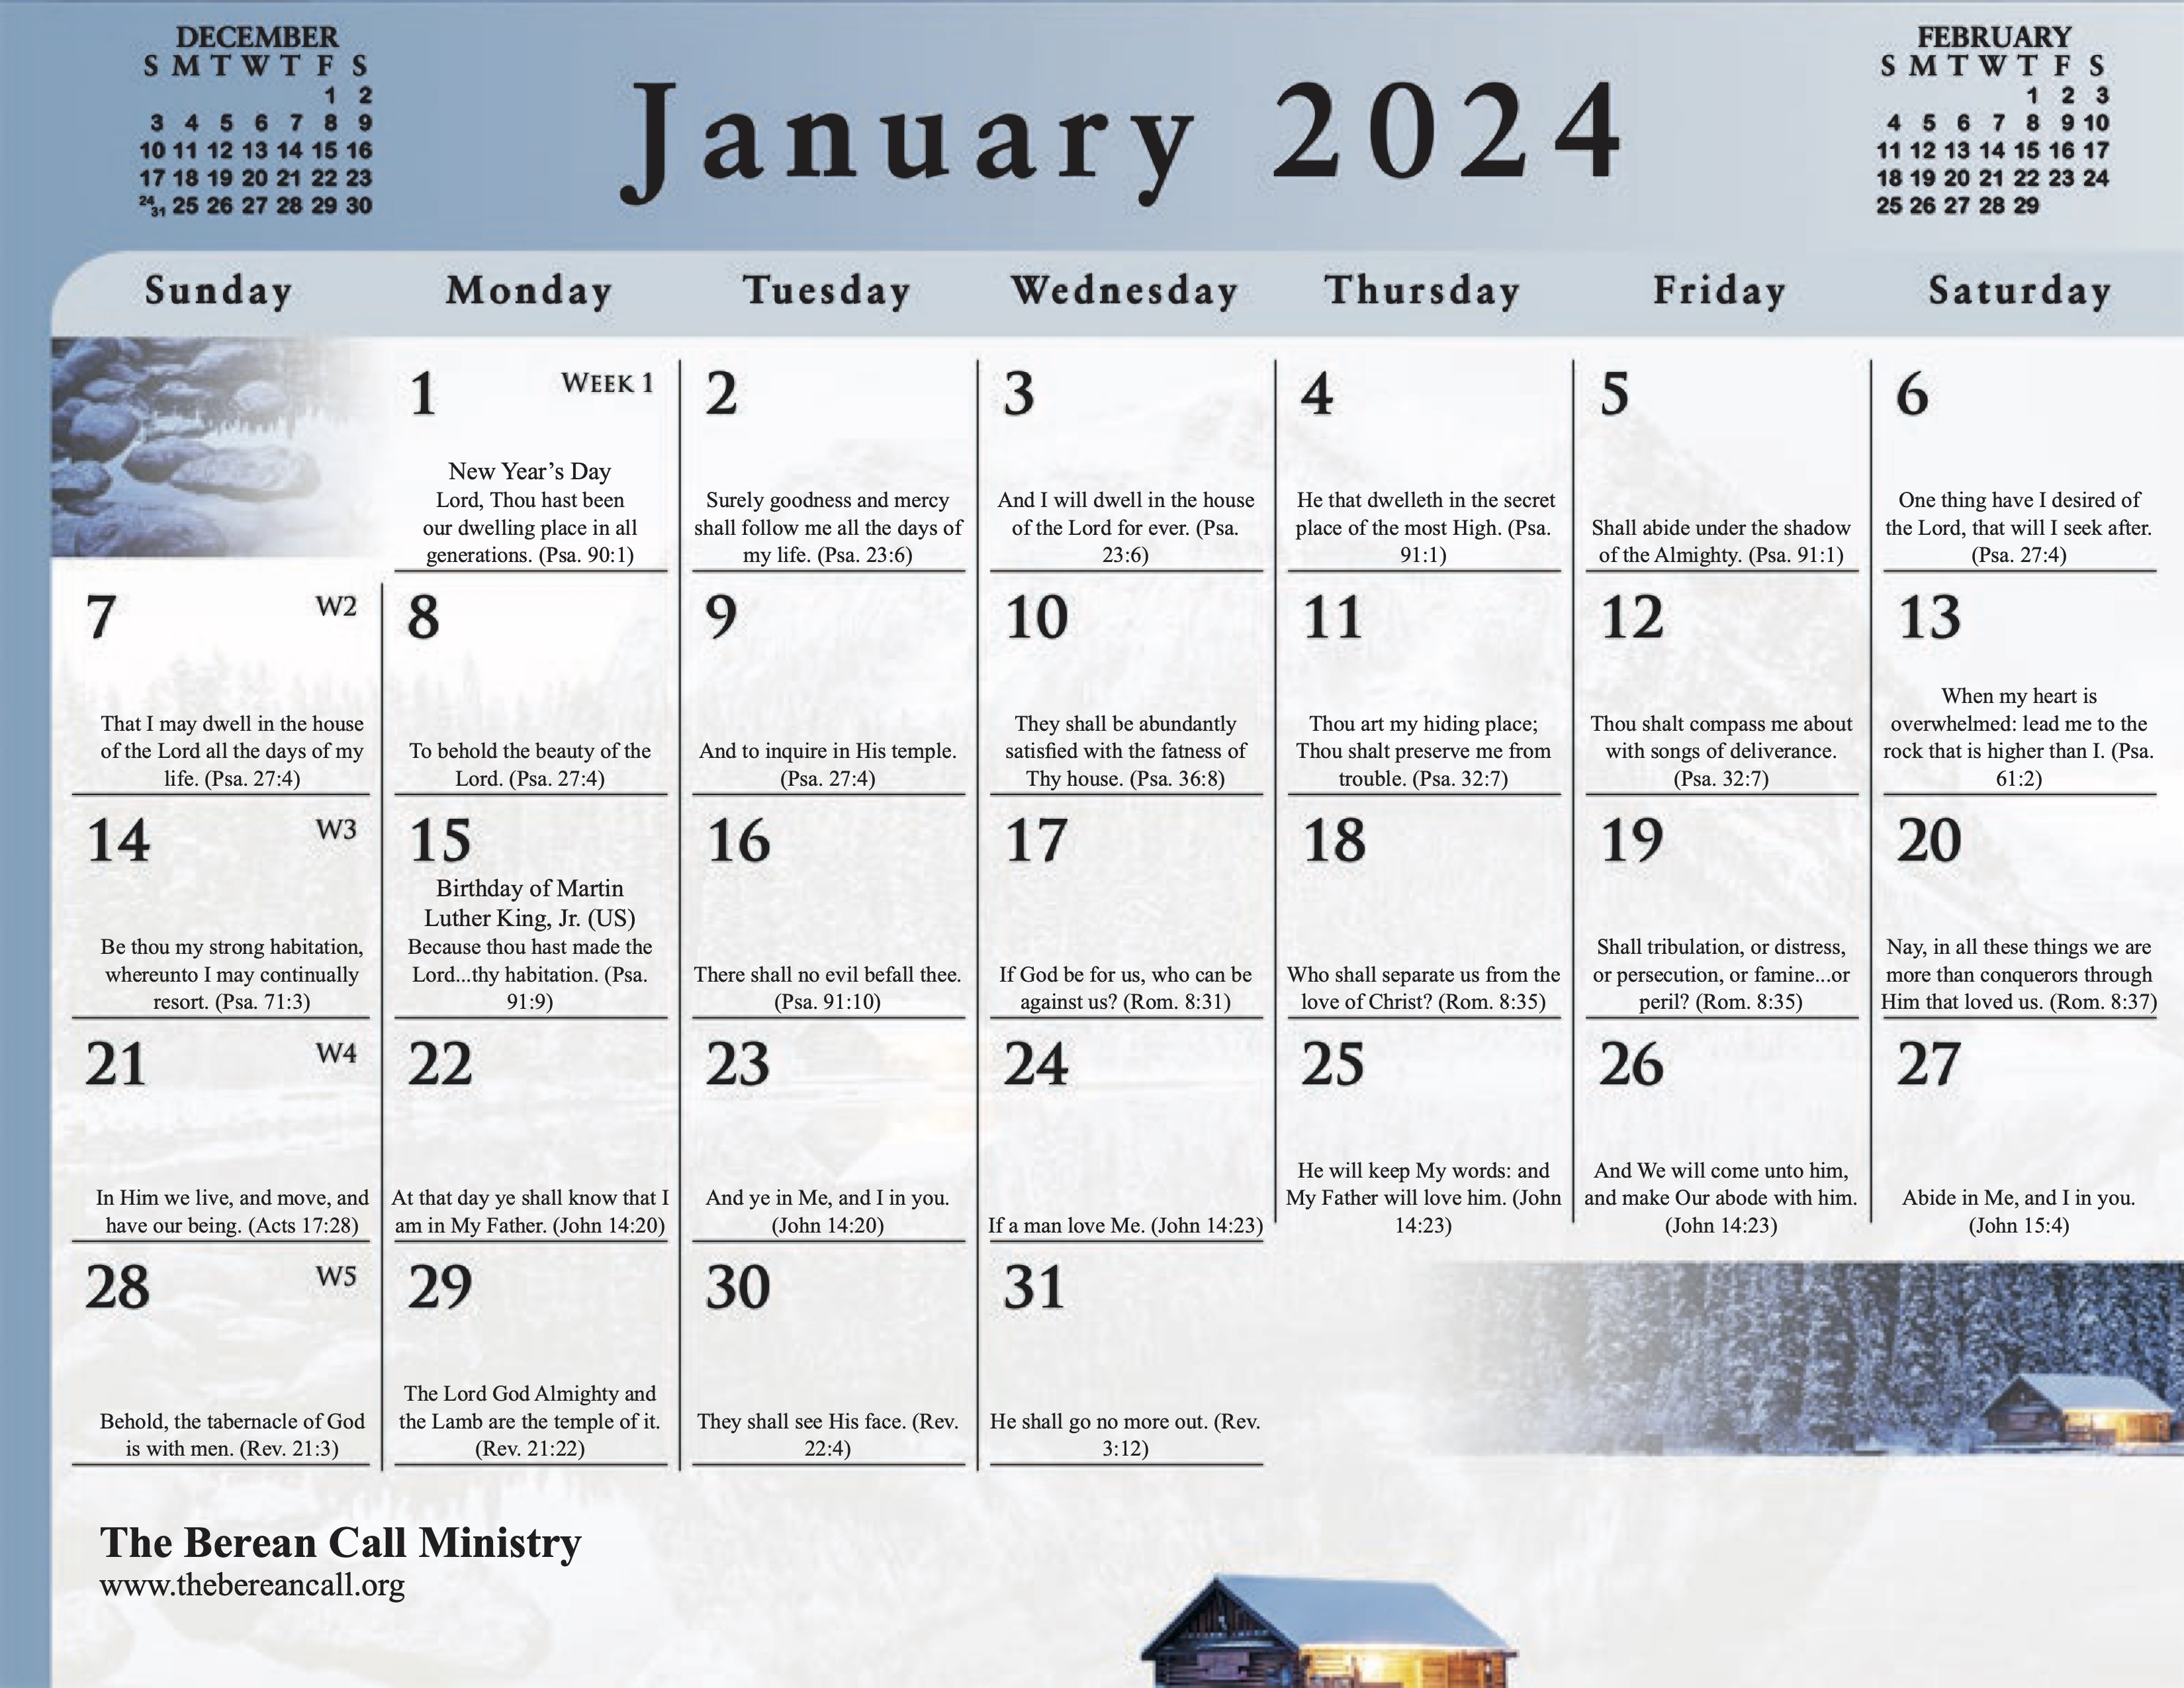 2024 Gospel of Peace Calendar *DAILY + MONTHLY VERSES*